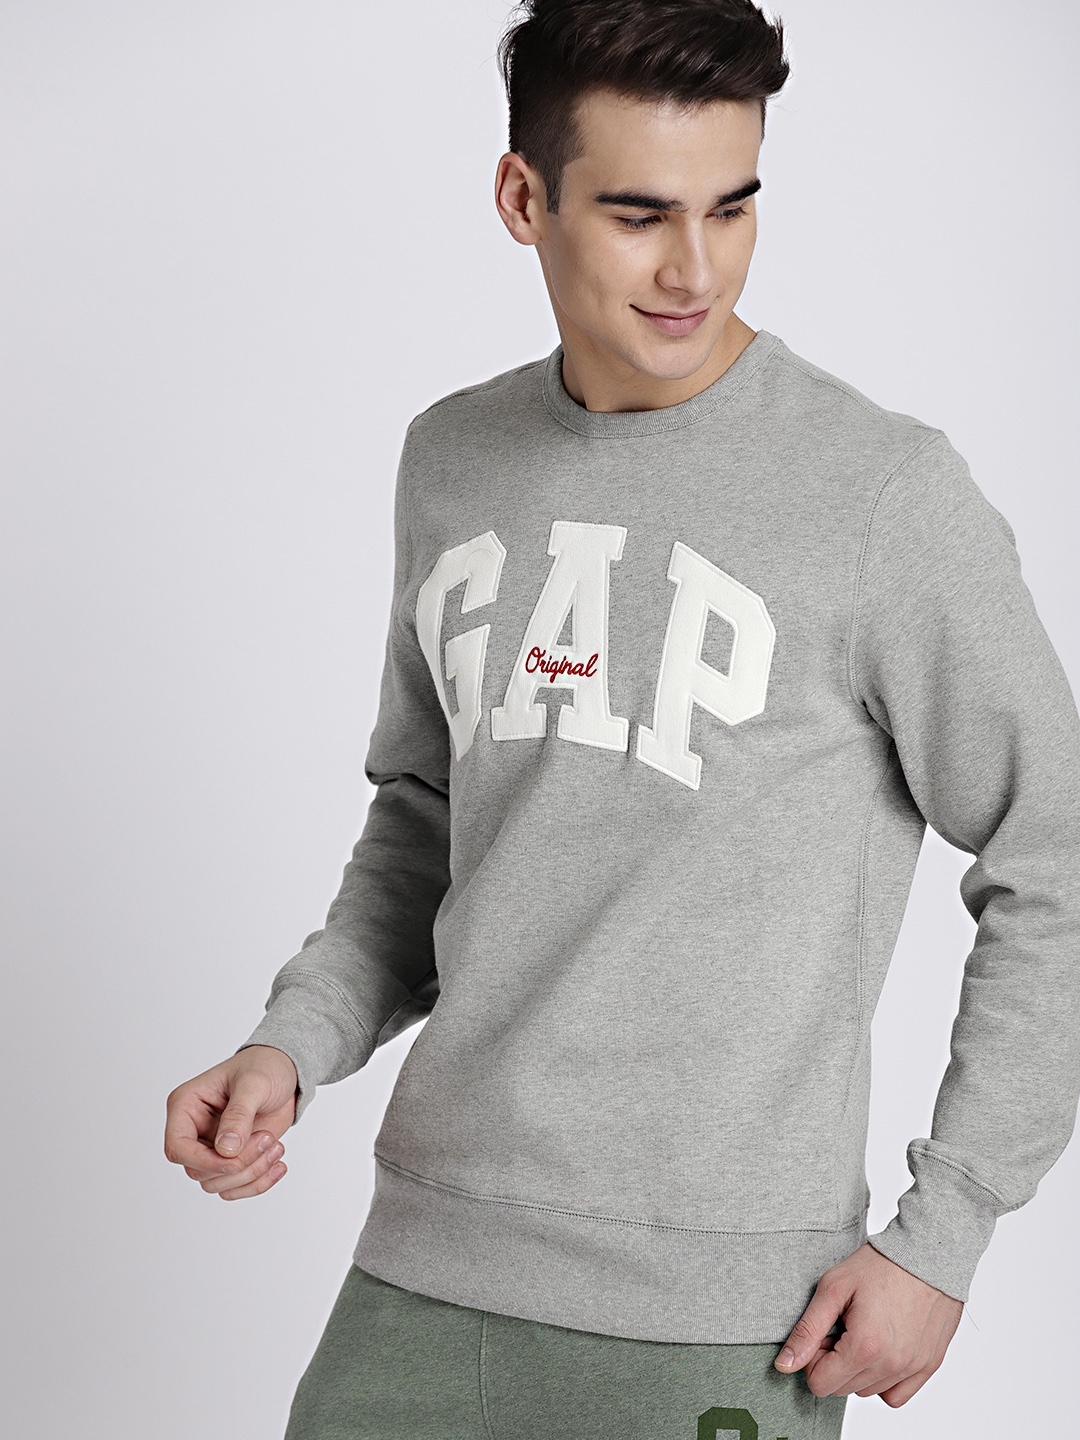 gap original sweatshirt